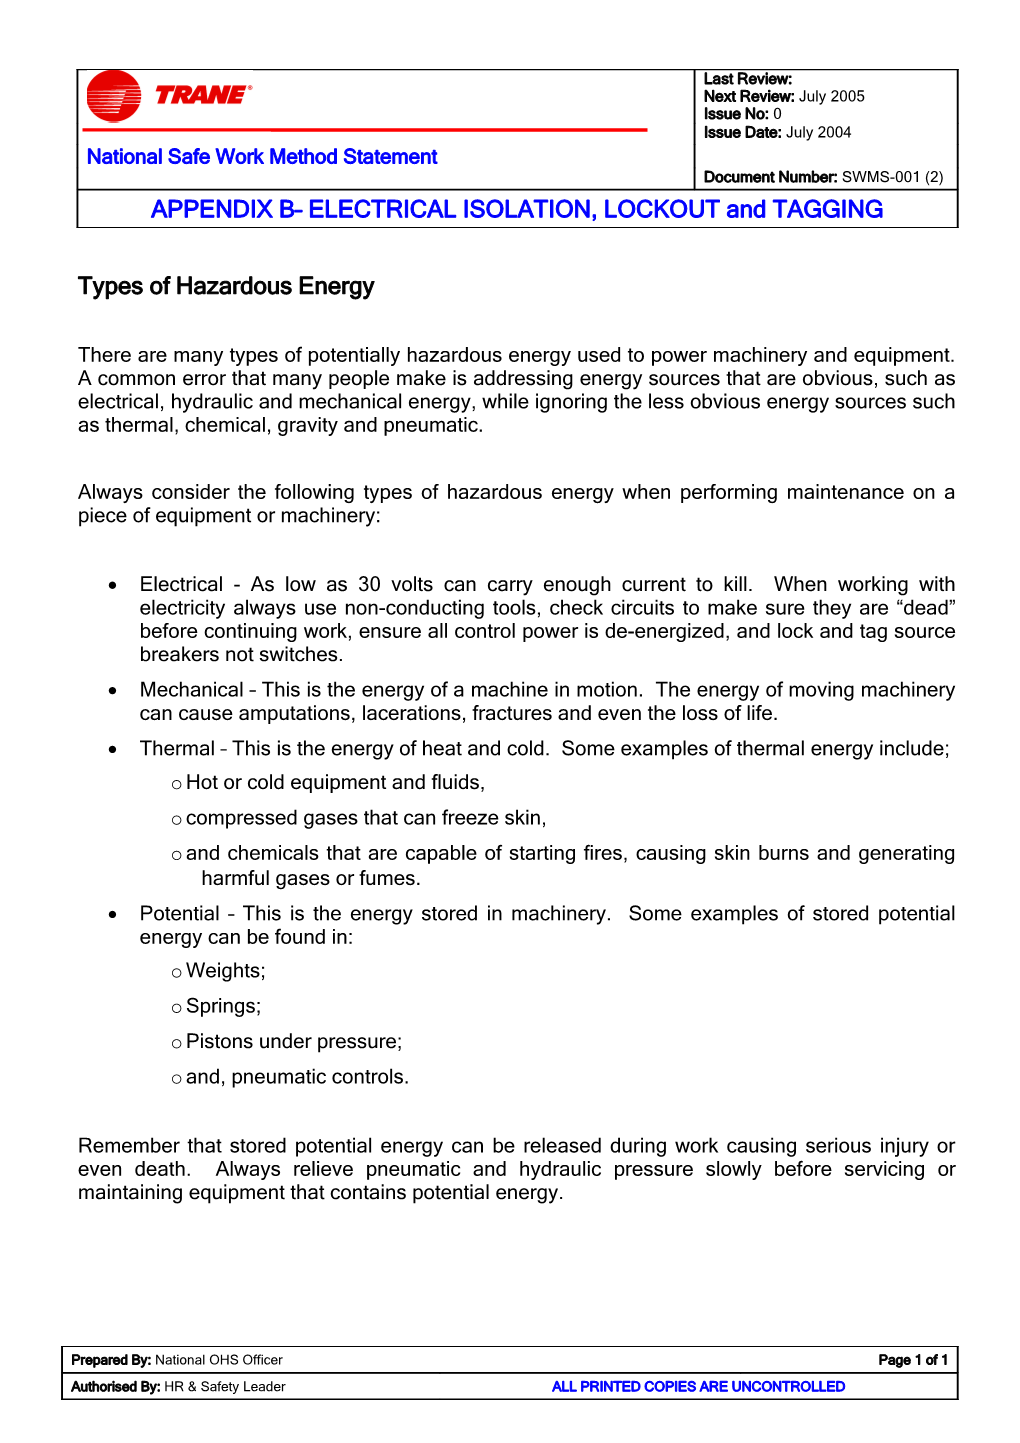 Types of Hazardous Energy